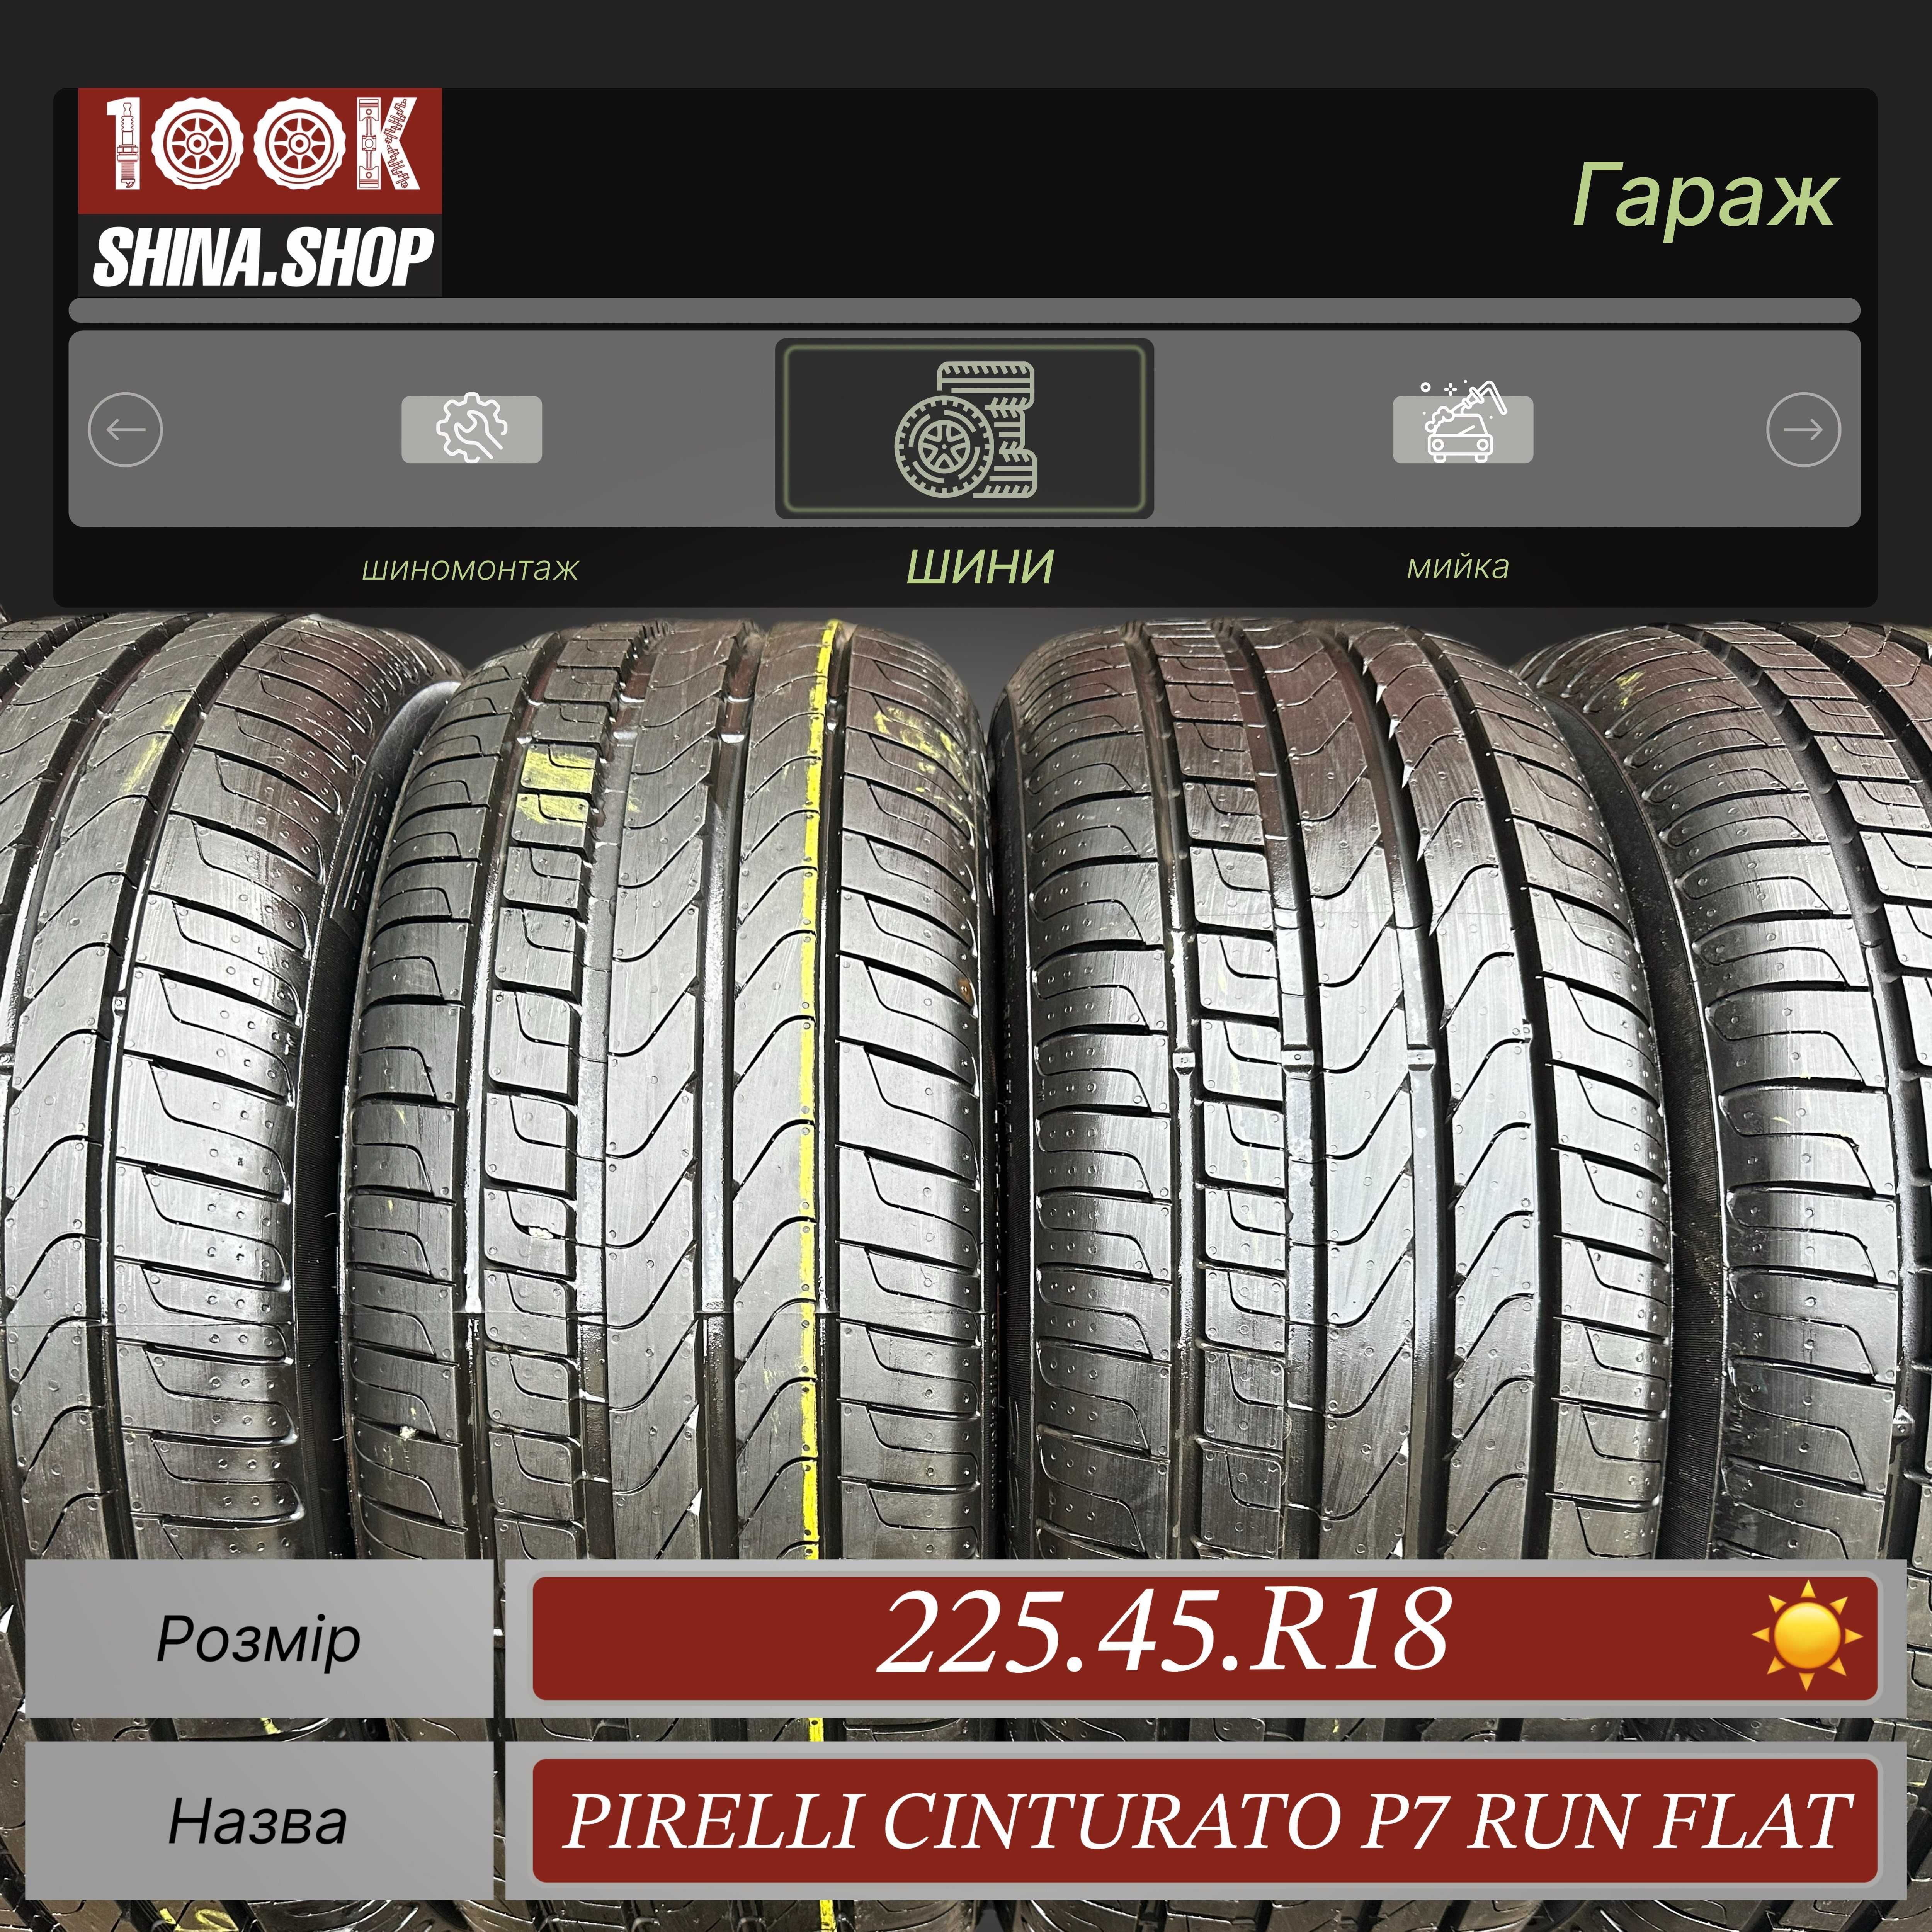 Шины Demo 225 45 R 18 Pirelli Cinturato P7 Run Flat лето резина